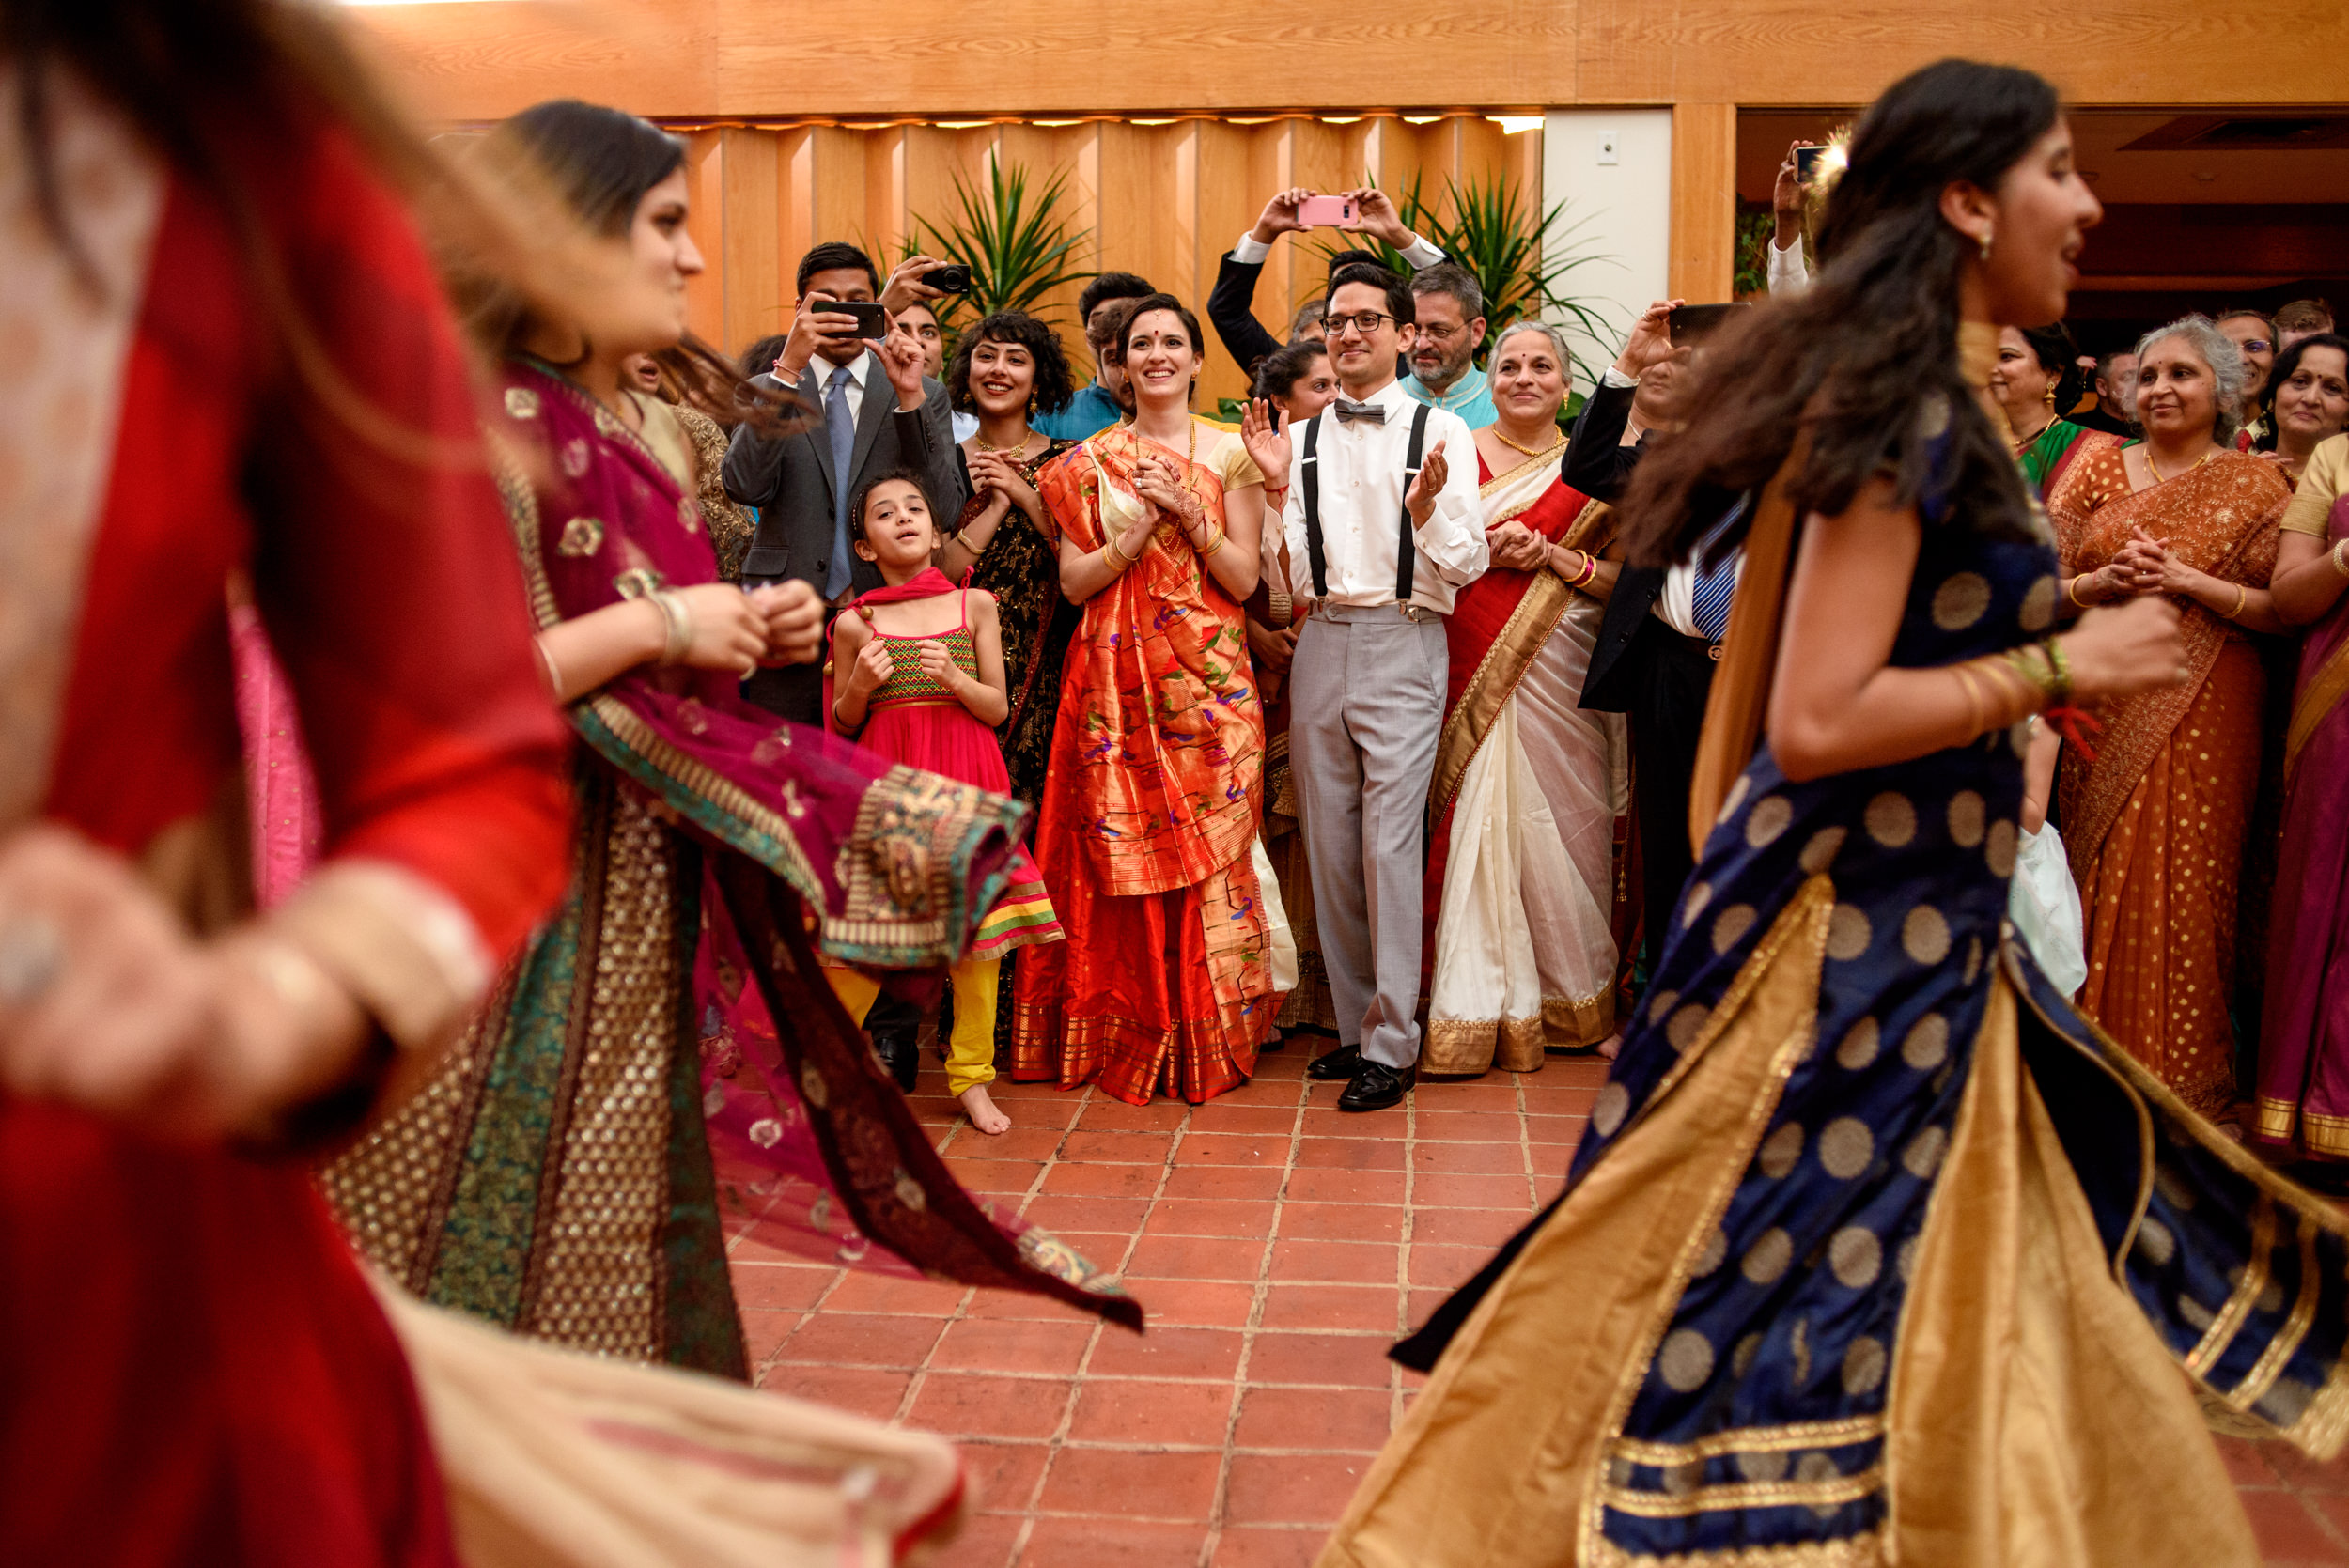 Philadelphia Indian wedding reception photos 